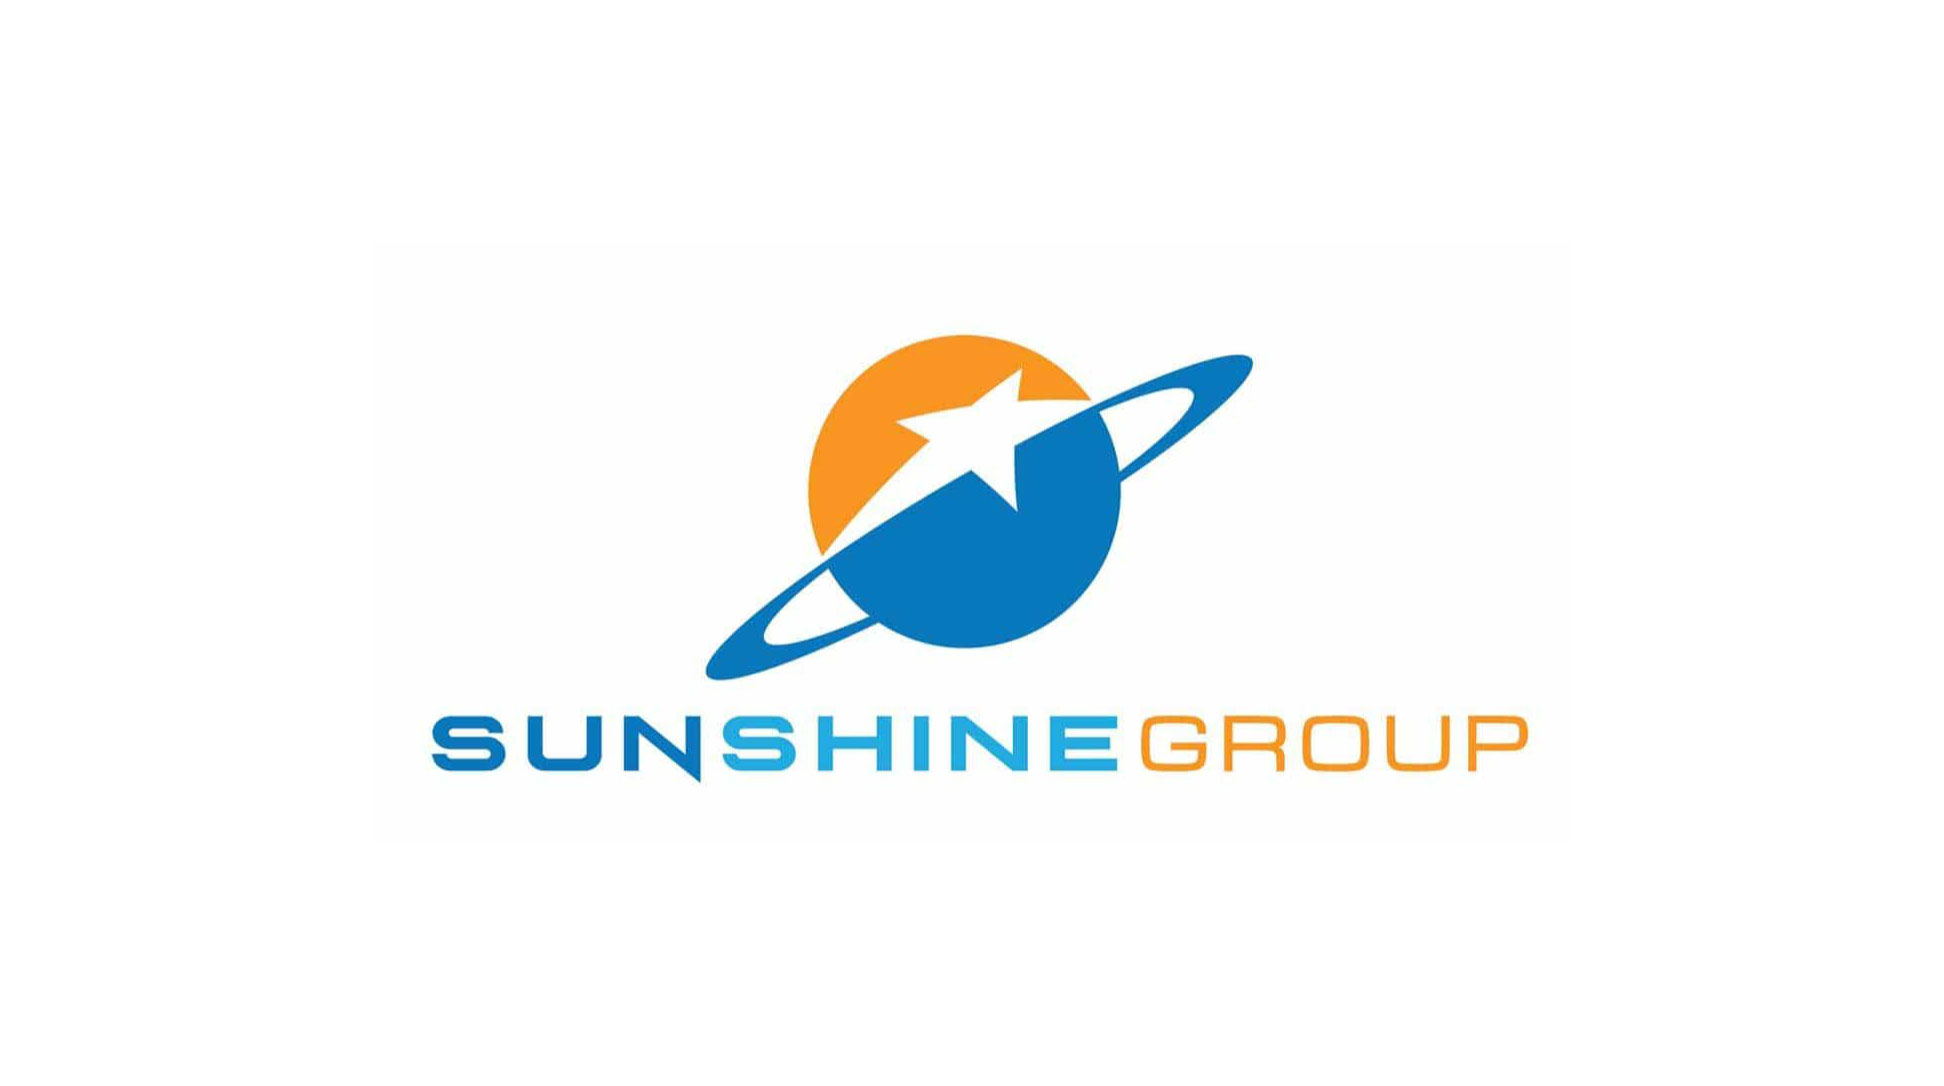 Sunshine Group developer - Behind the Sunshine Crystal River's success